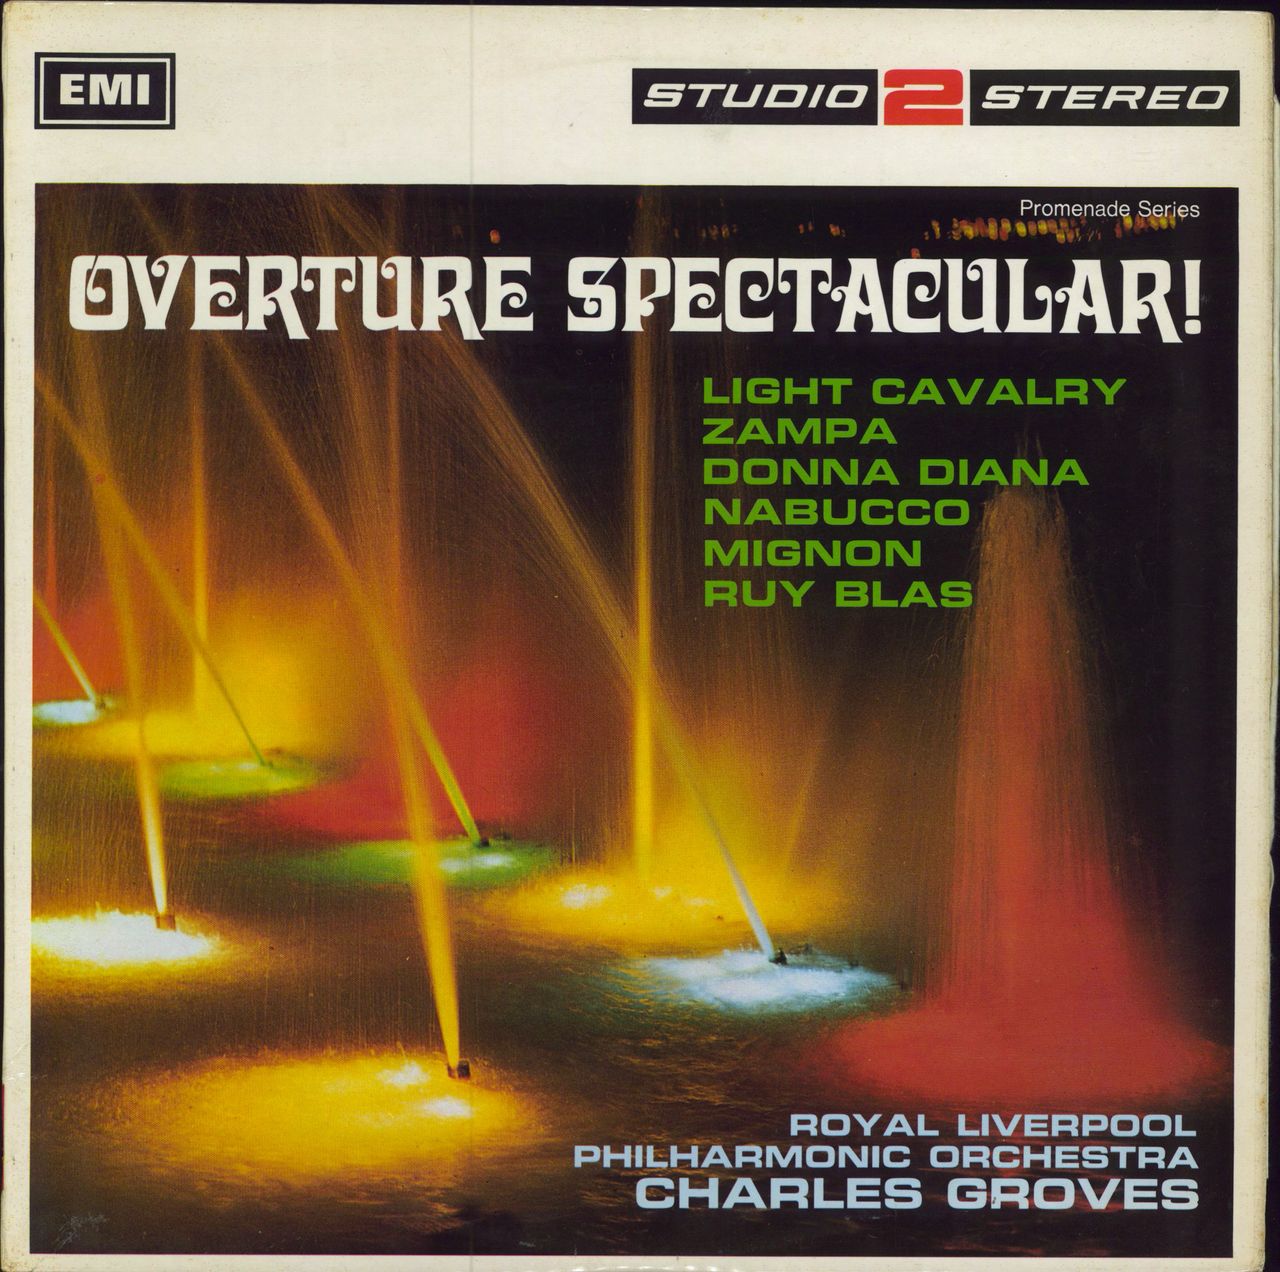 The Royal Liverpool Philharmonic Orchestra Overture Spectacular! UK vinyl LP album (LP record) TWO190